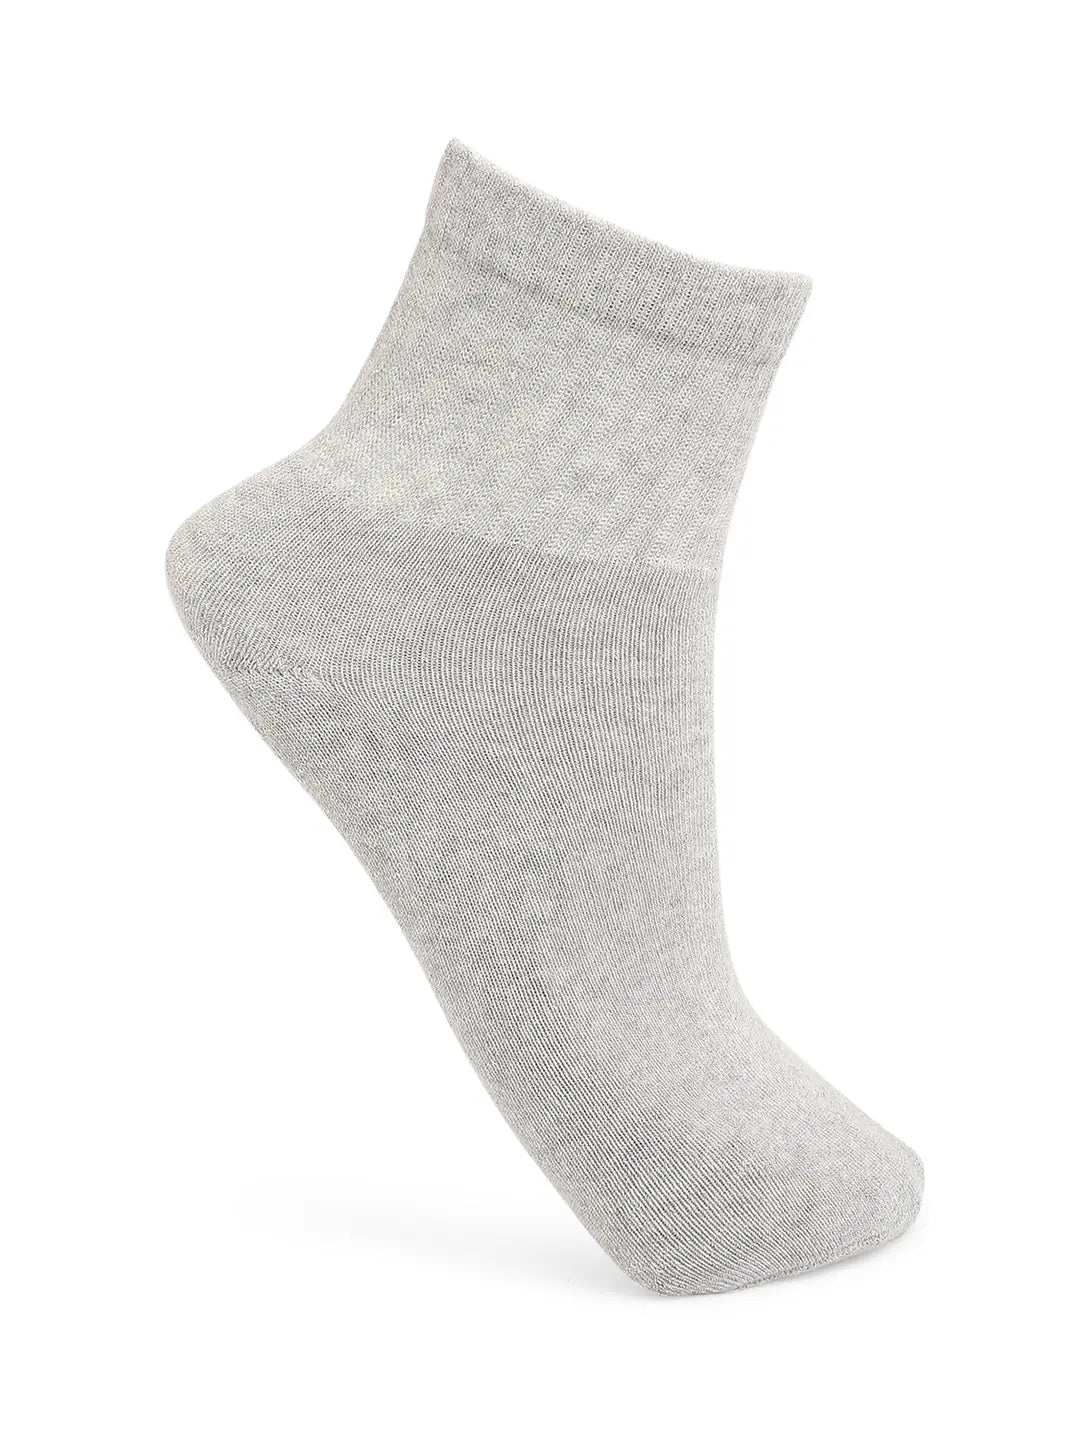 Men Premium Grey & BLack Cotton Socks - Pack Of 3- UnderJeans by Spykar